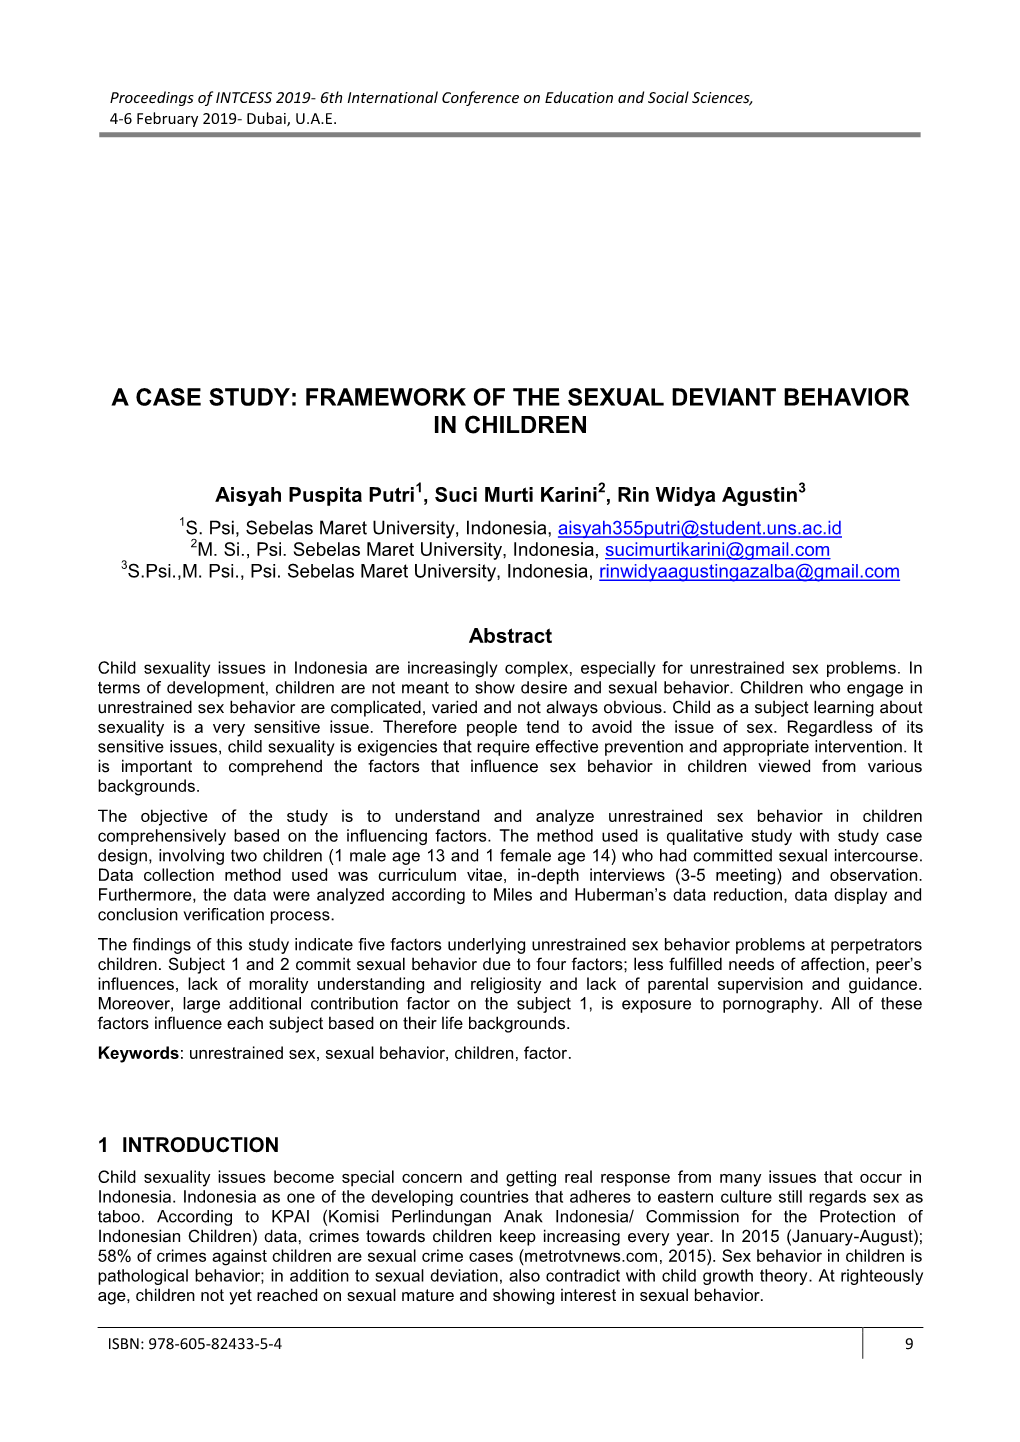 Framework of the Sexual Deviant Behavior in Children